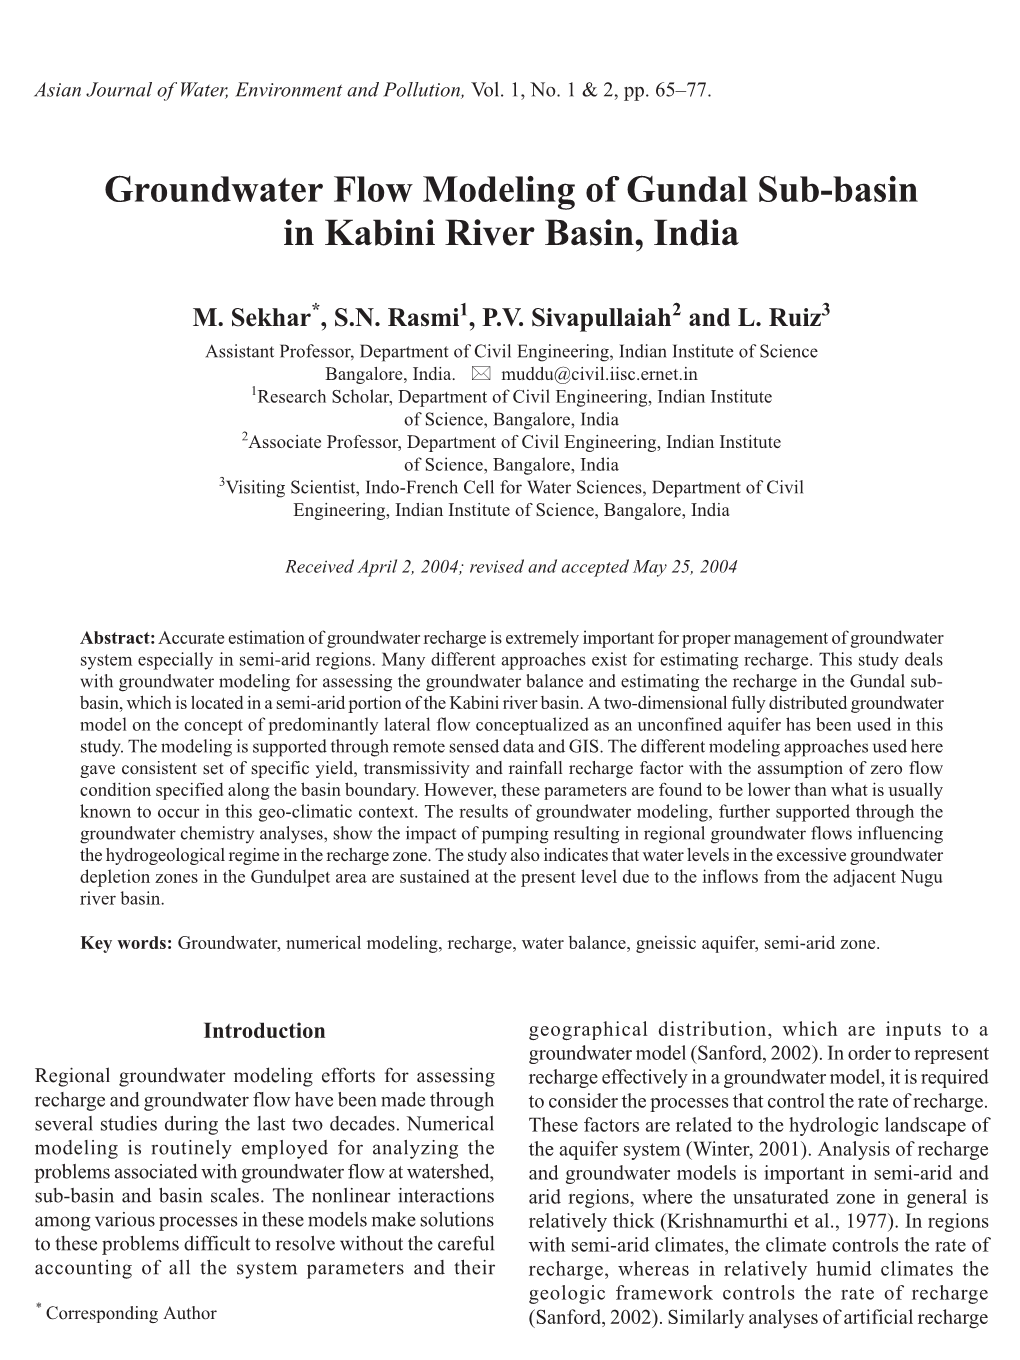 Groundwater Flow Modeling of Gundal Sub-Basin in Kabini River Basin, India